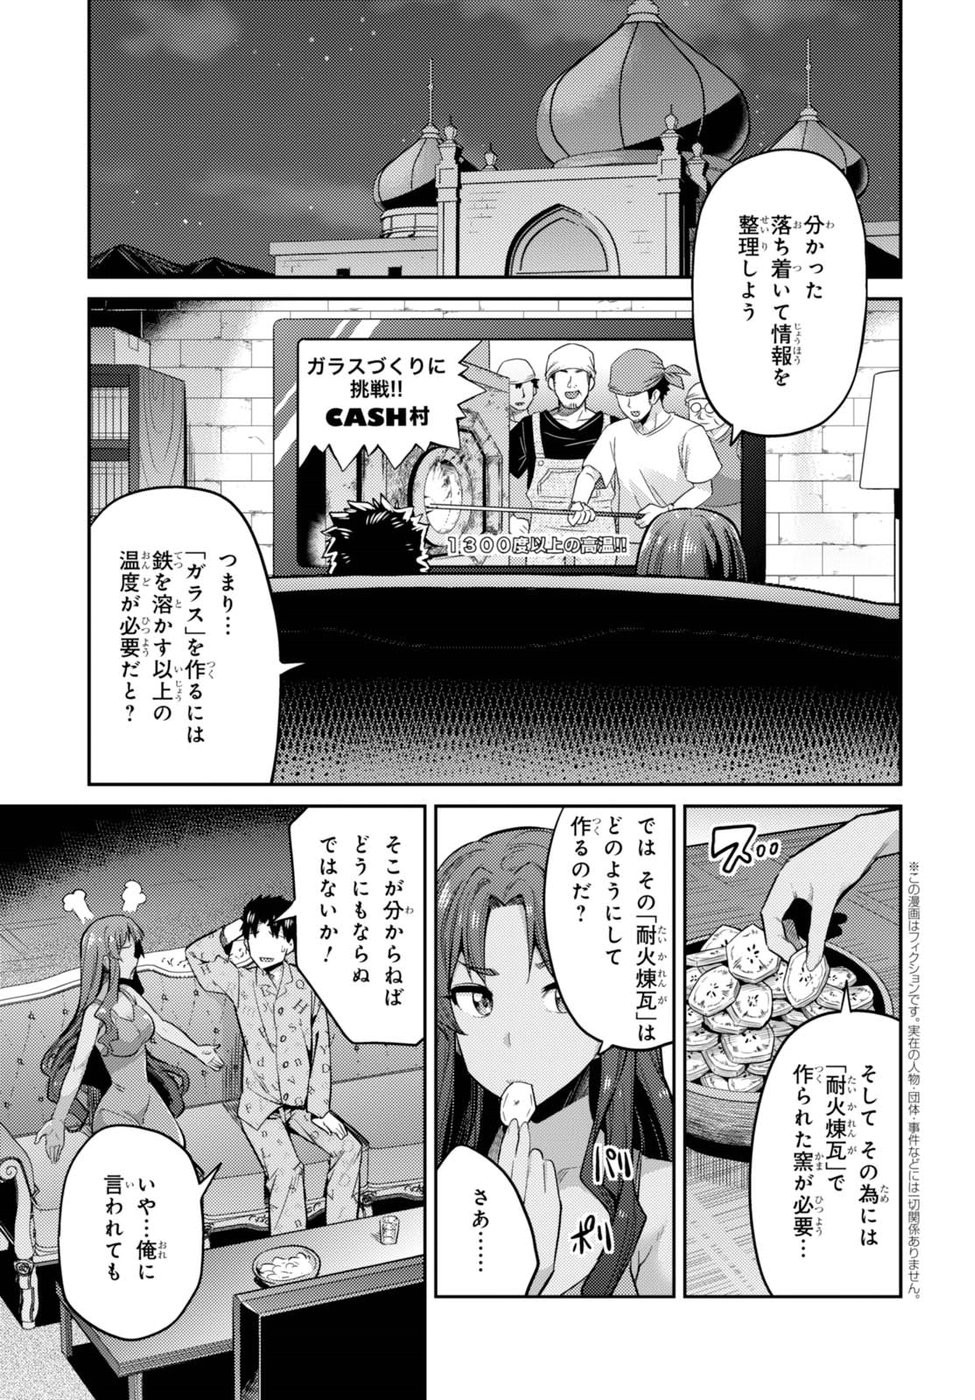 Risou no Himo Seikatsu - Chapter 011 - Page 3